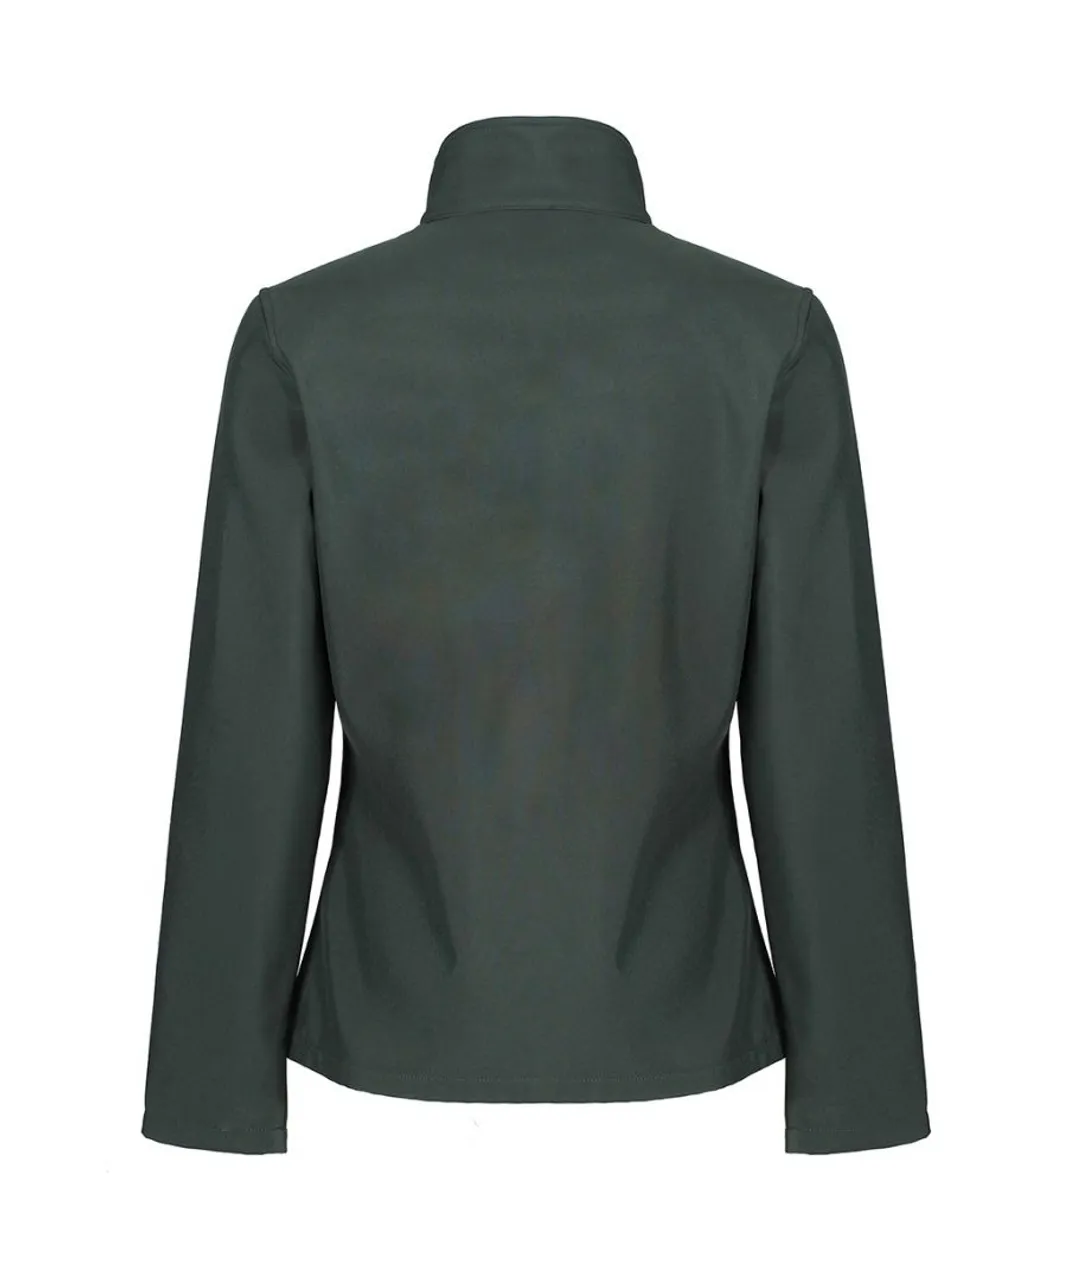 Regatta Standout Womens/Ladies Ablaze Printable Soft Shell Jacket (Dark Spruce/Black) - Multicolour